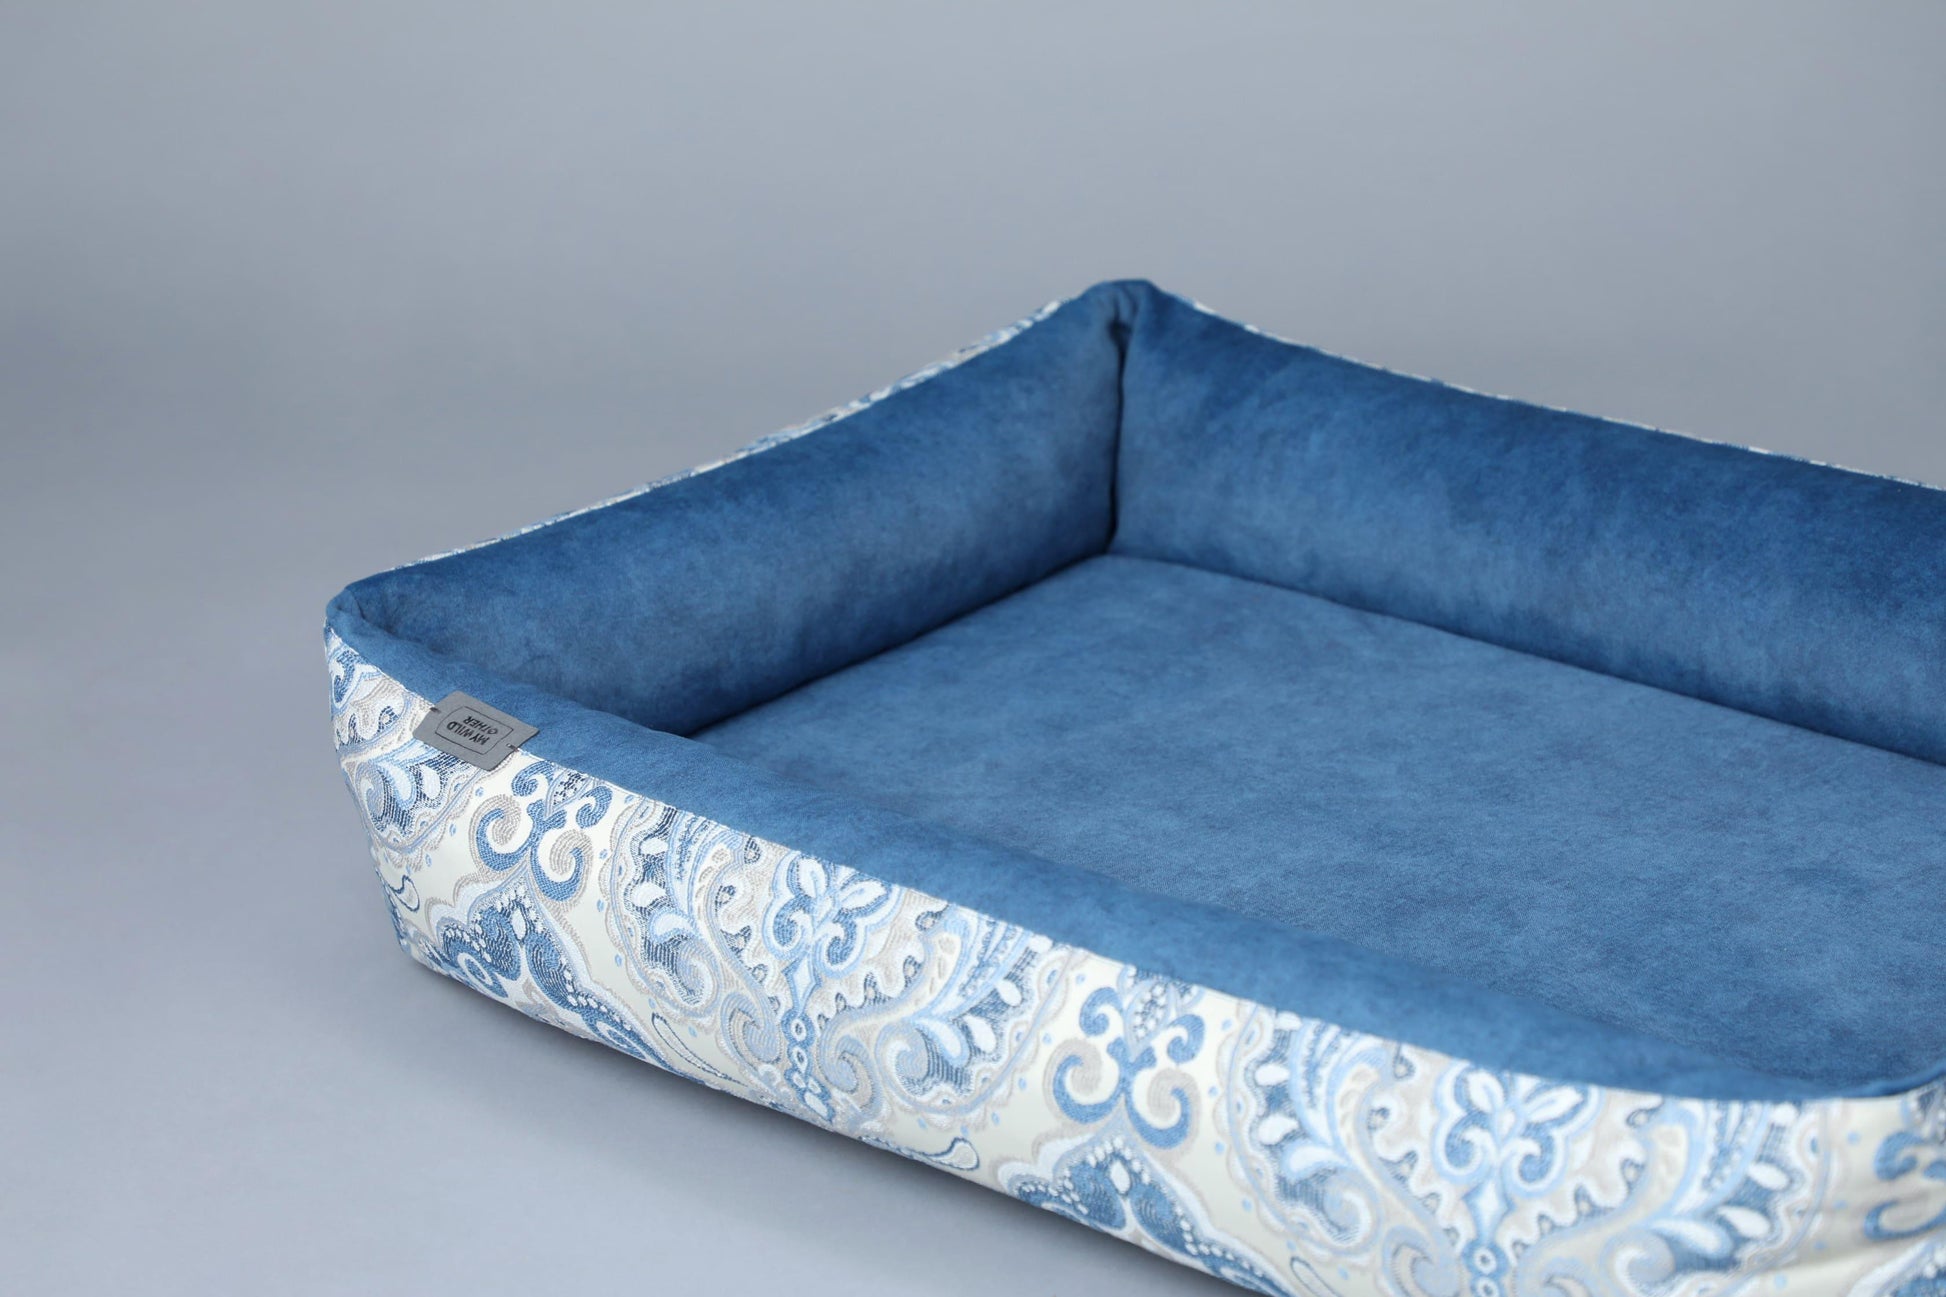 2-sided bohemian style dog bed. SAPPHIRE BLUE - premium dog goods handmade in Europe by animalistus